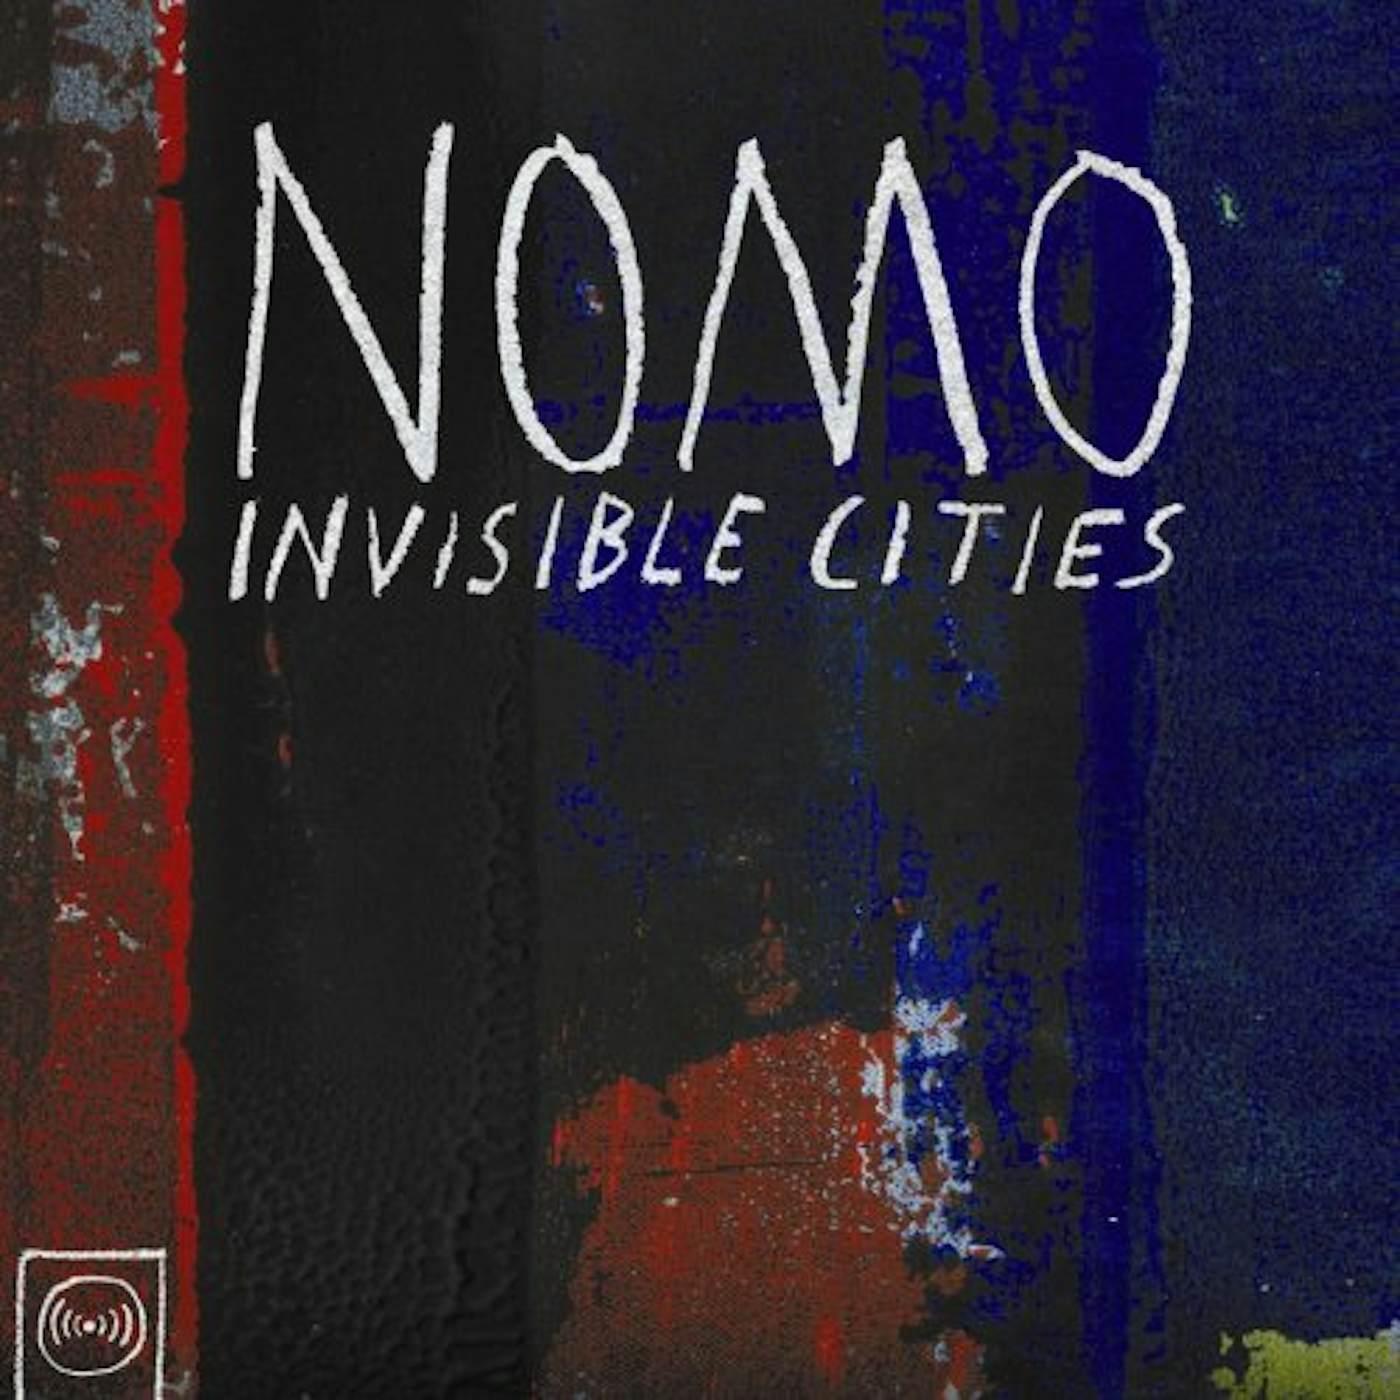 Nomo Invisible Cities Vinyl Record